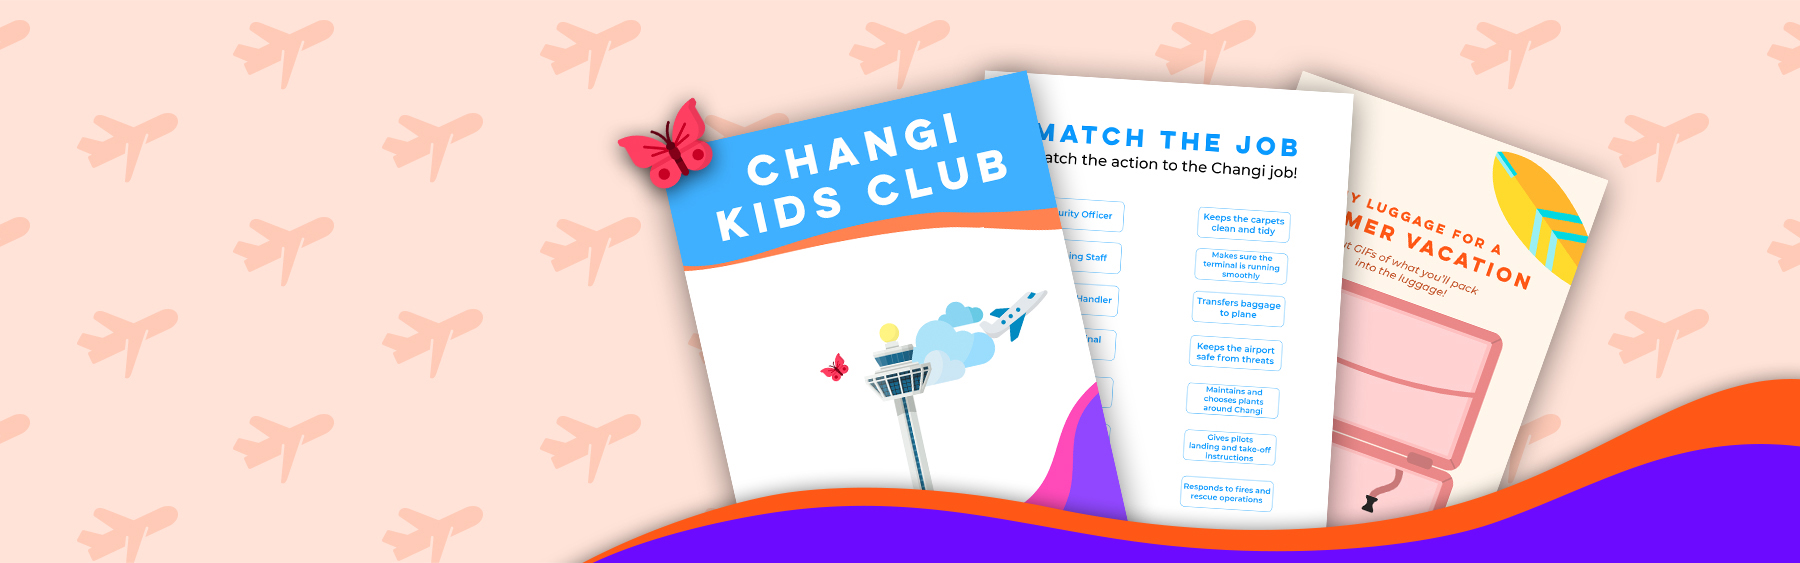 Changi Kids Club